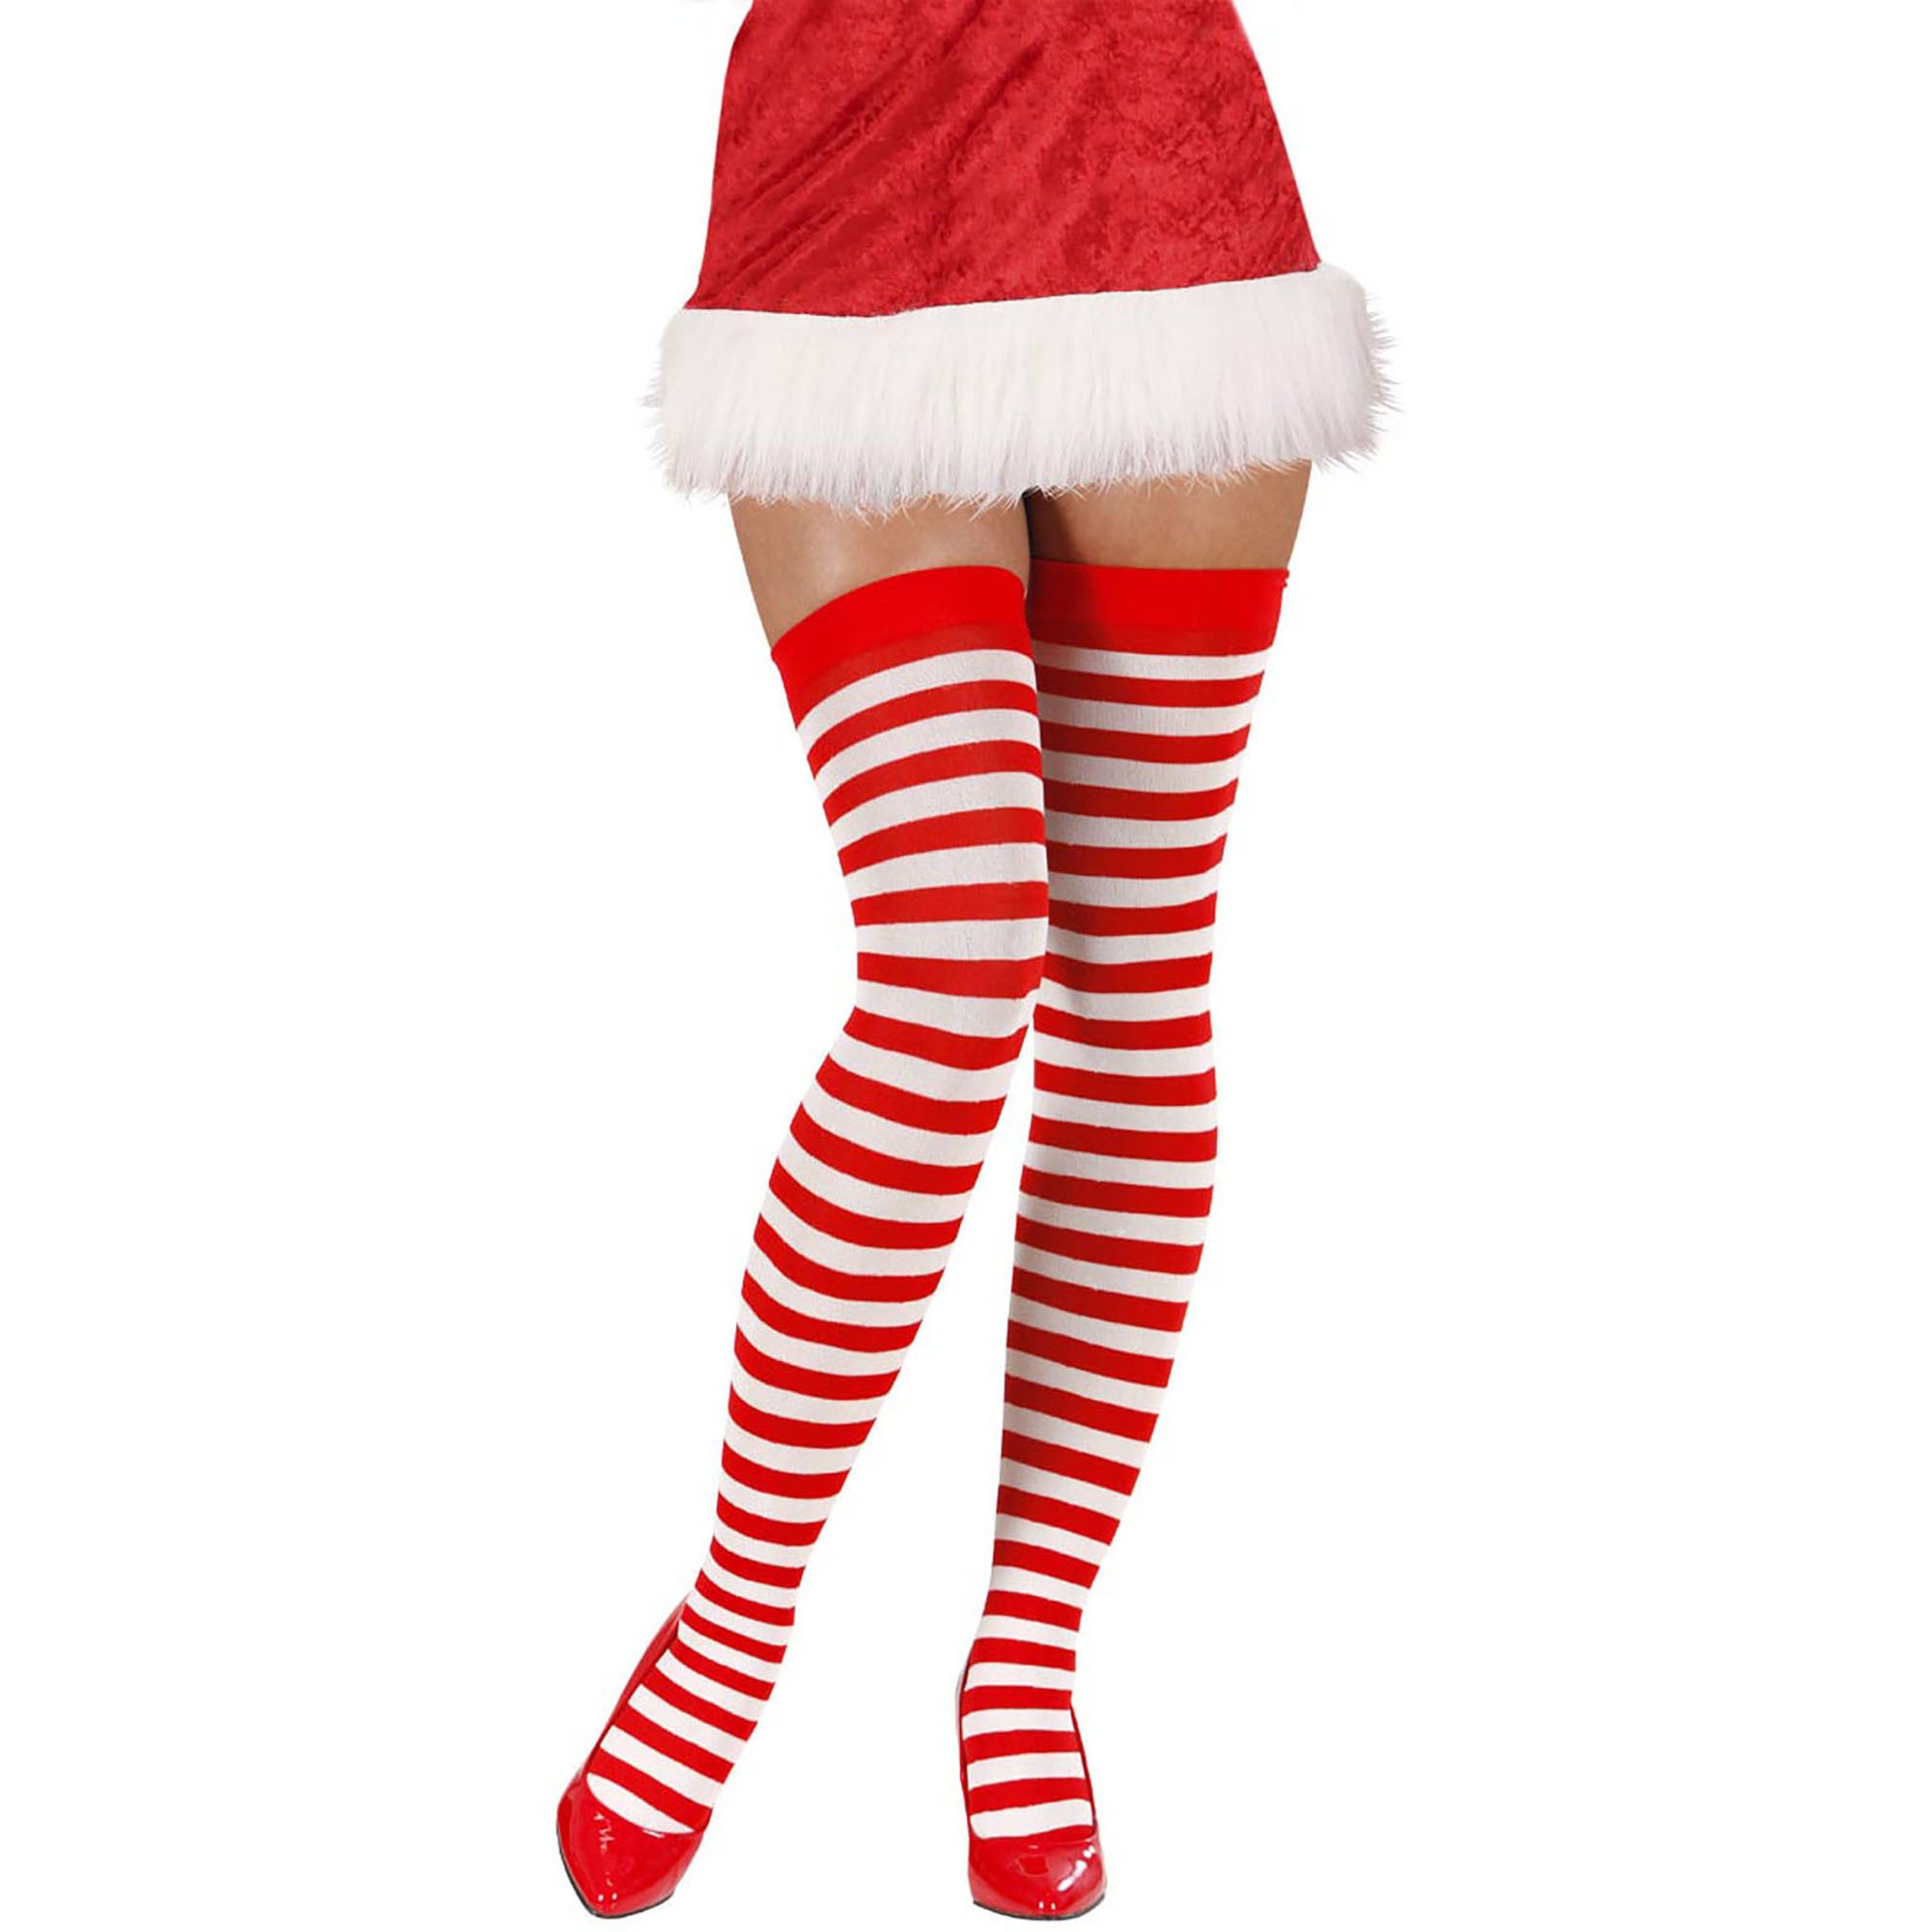 Widmann -Kniekousen Rood / Wit 70den - rood - One Size - Kerst - Verkleedkleding